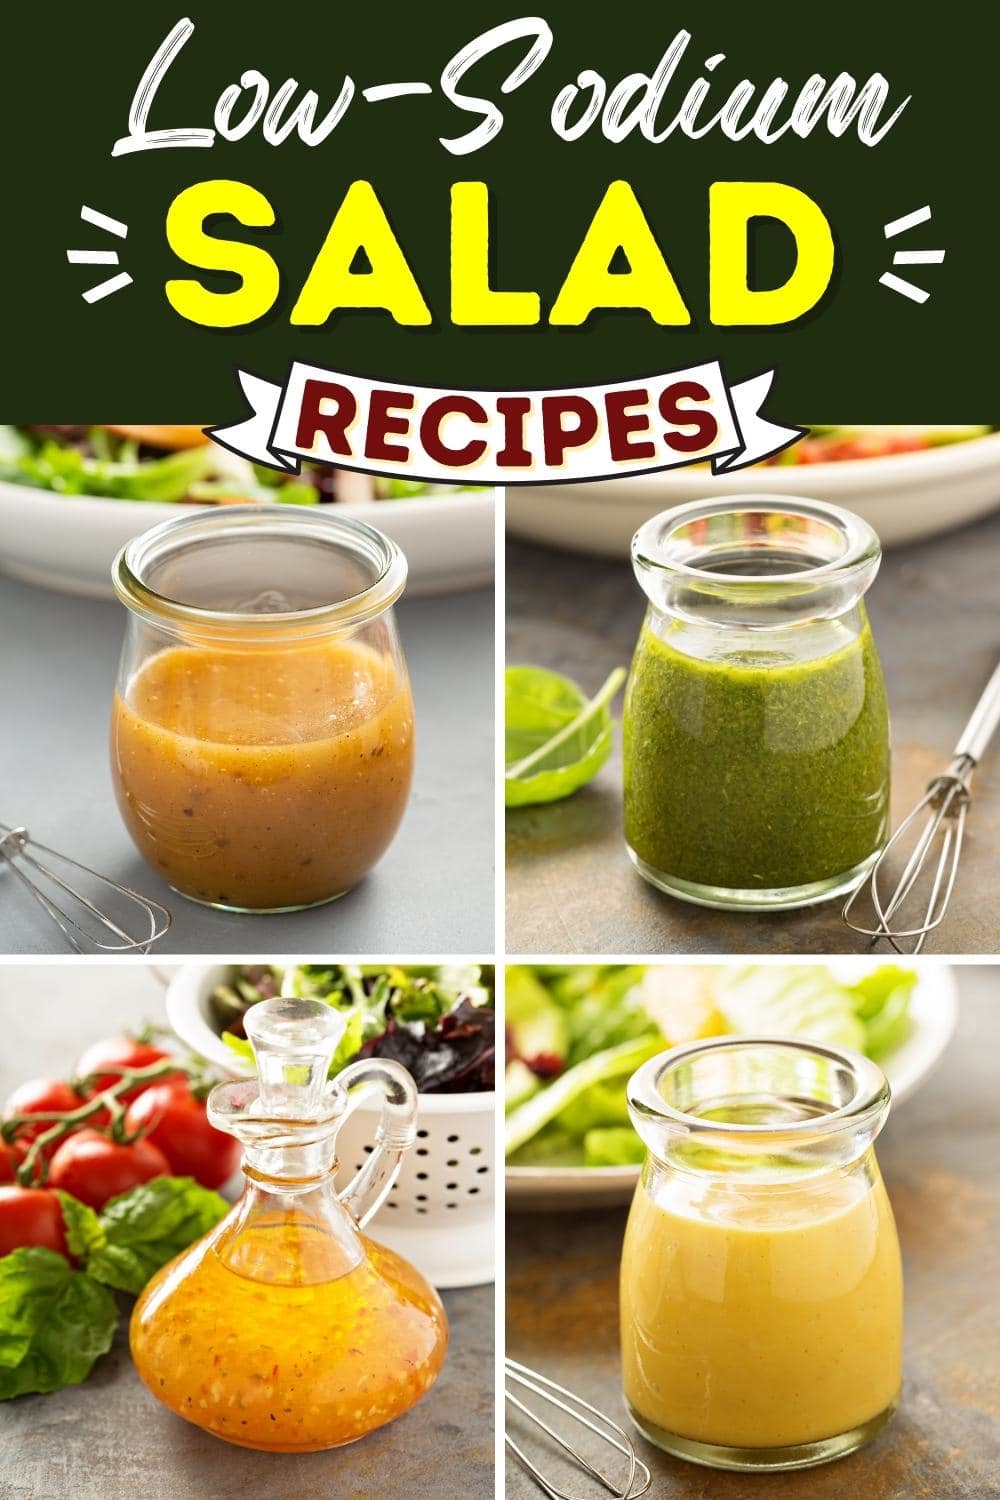 15 Homemade Low-Sodium Salad Dressing Recipes - Insanely Good